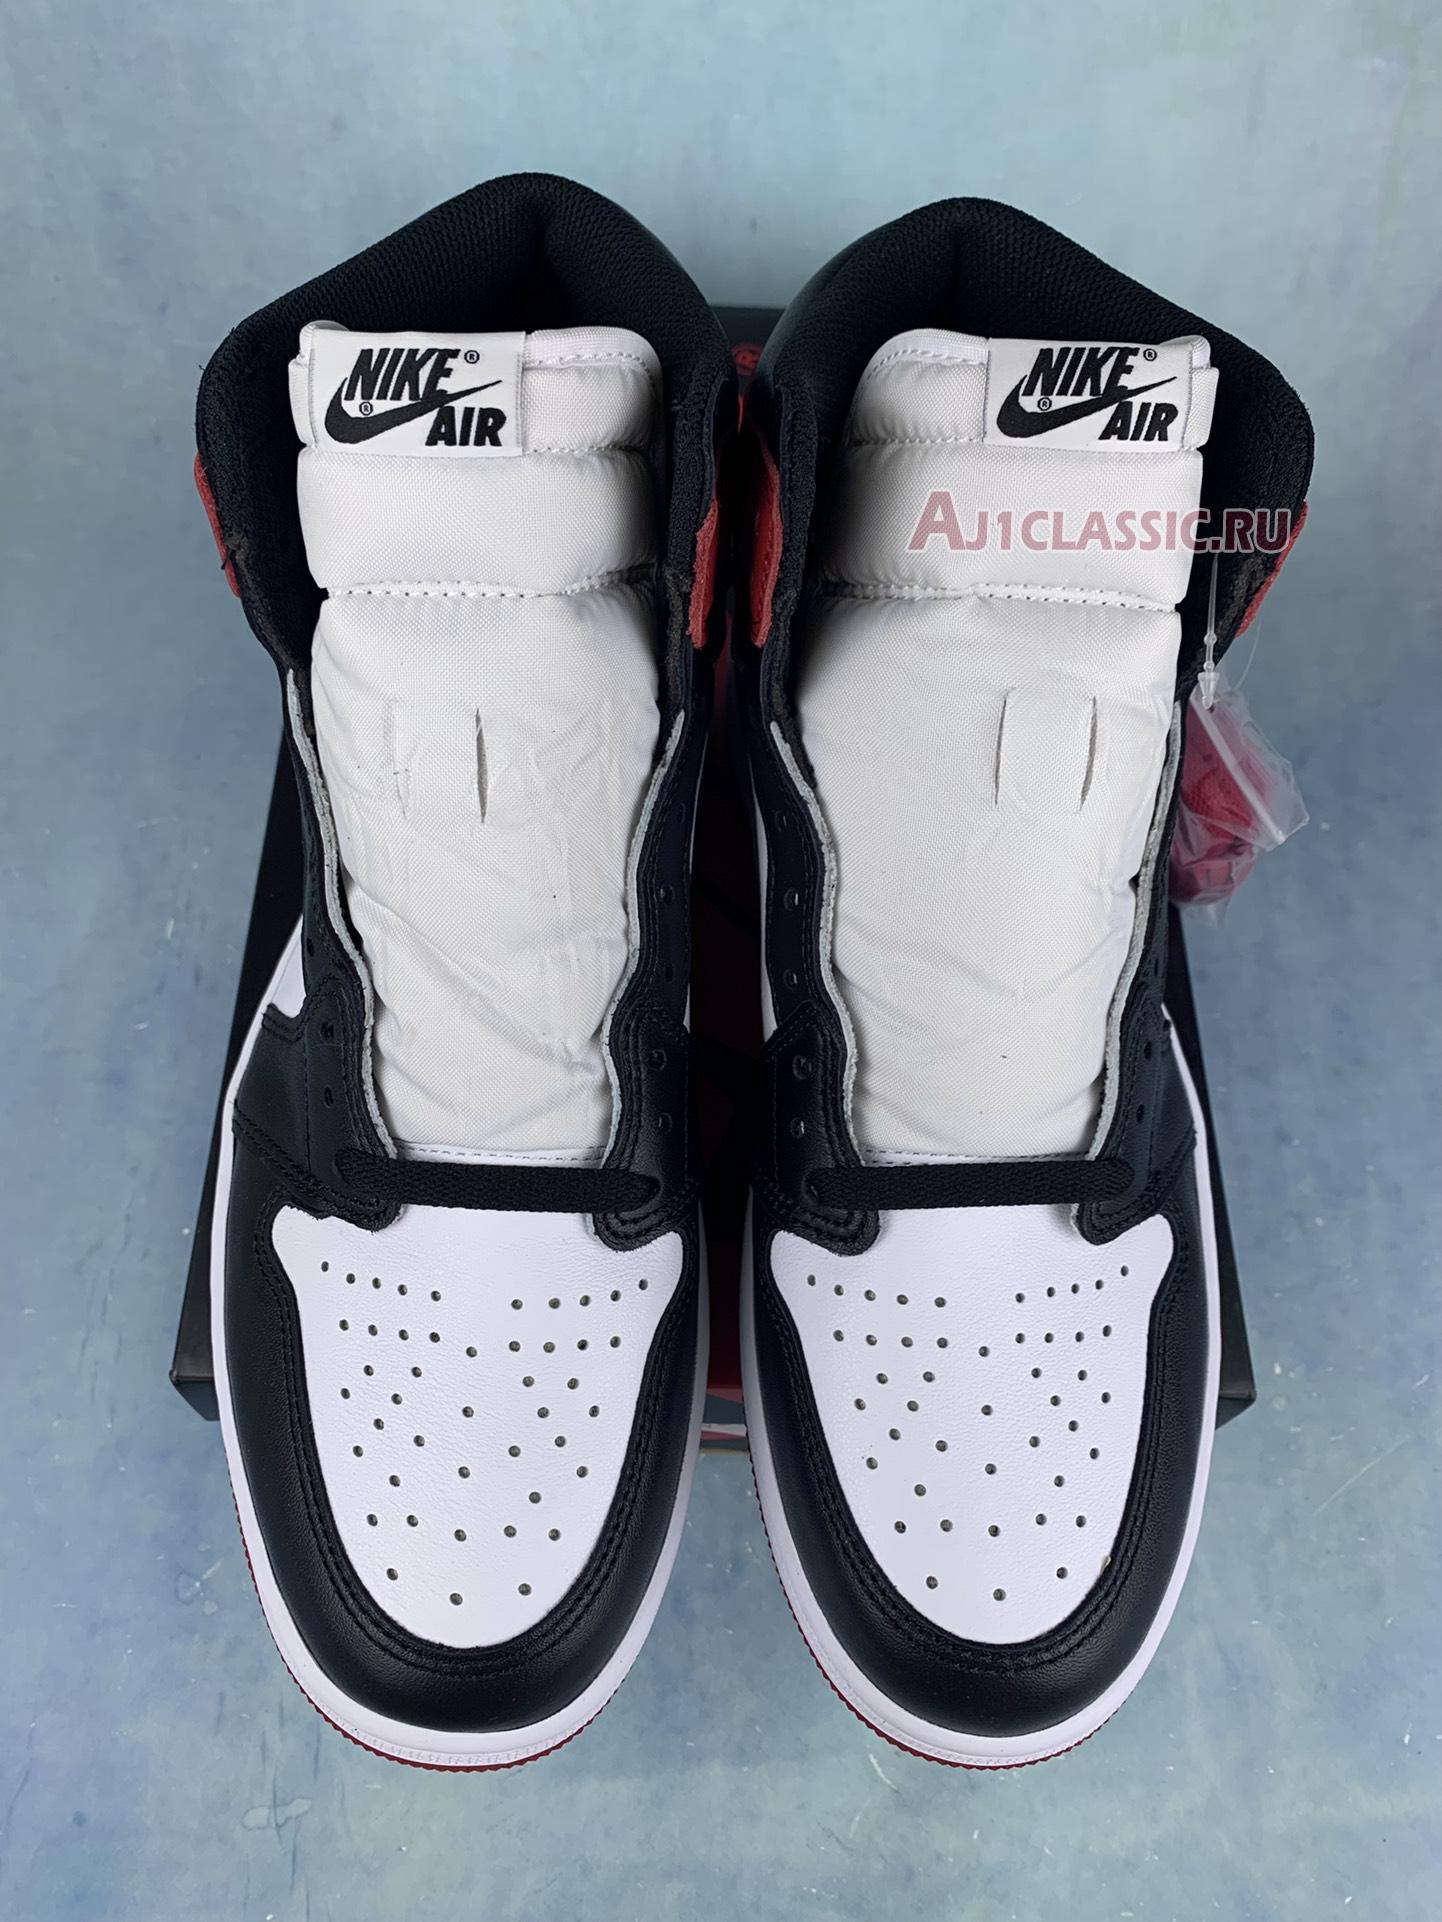 Air Jordan 1 Retro High OG "Black Toe" 555088-125-3